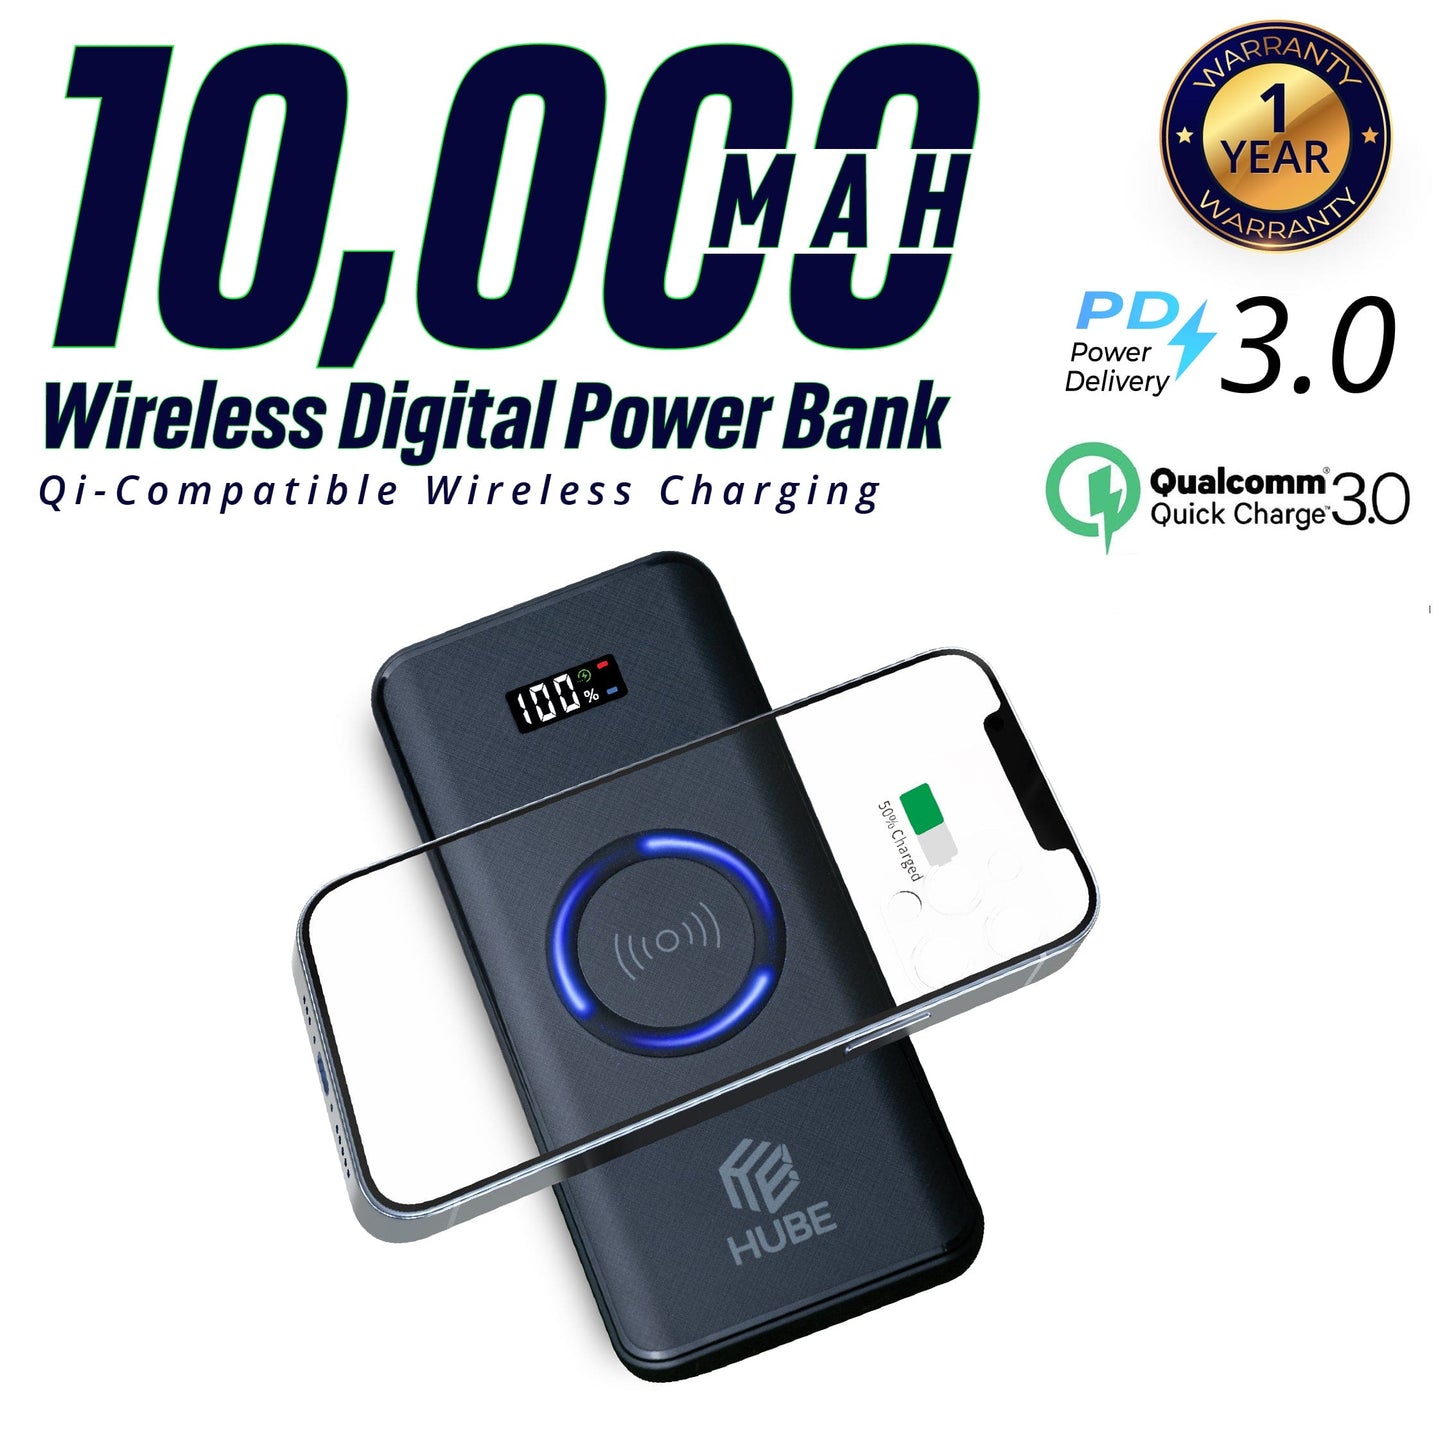 Buy 1 Get 1 FREE - Wireless Charging 10,000 mAh Fast Charging Power Bank